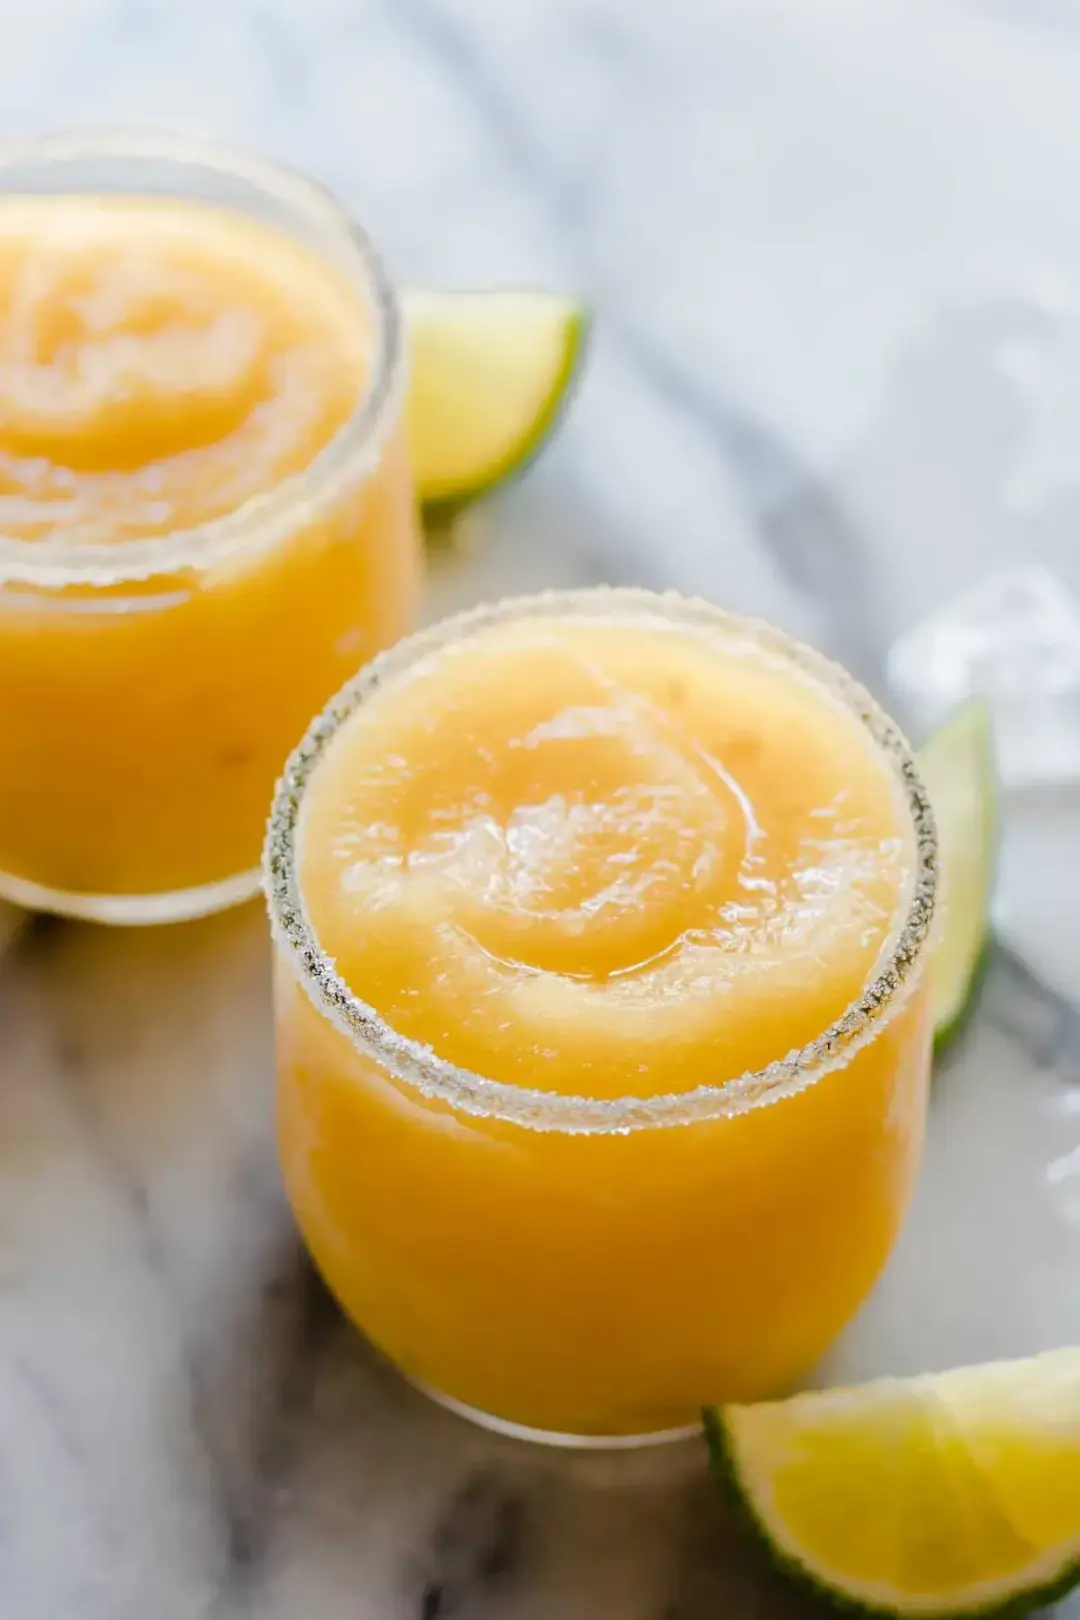 Tequila and Mango Juice recipe